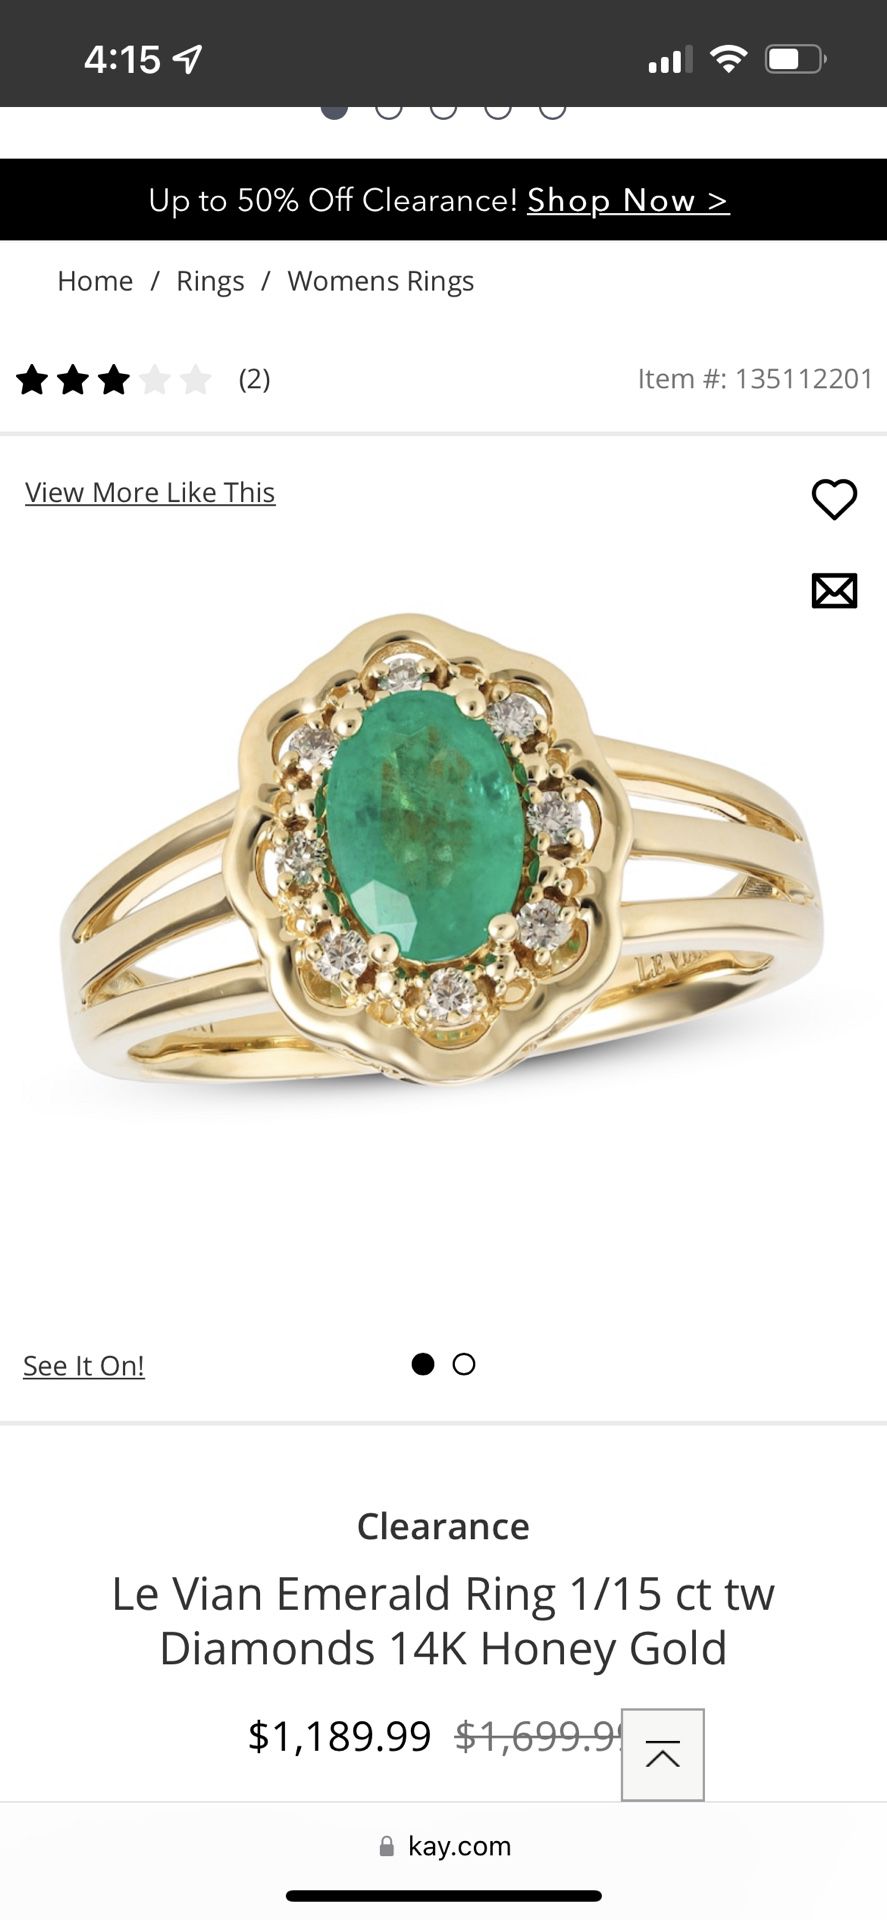 Le Vian Emerald Ring 1/15 ct tw Diamonds 14k Honey Gold Size 5